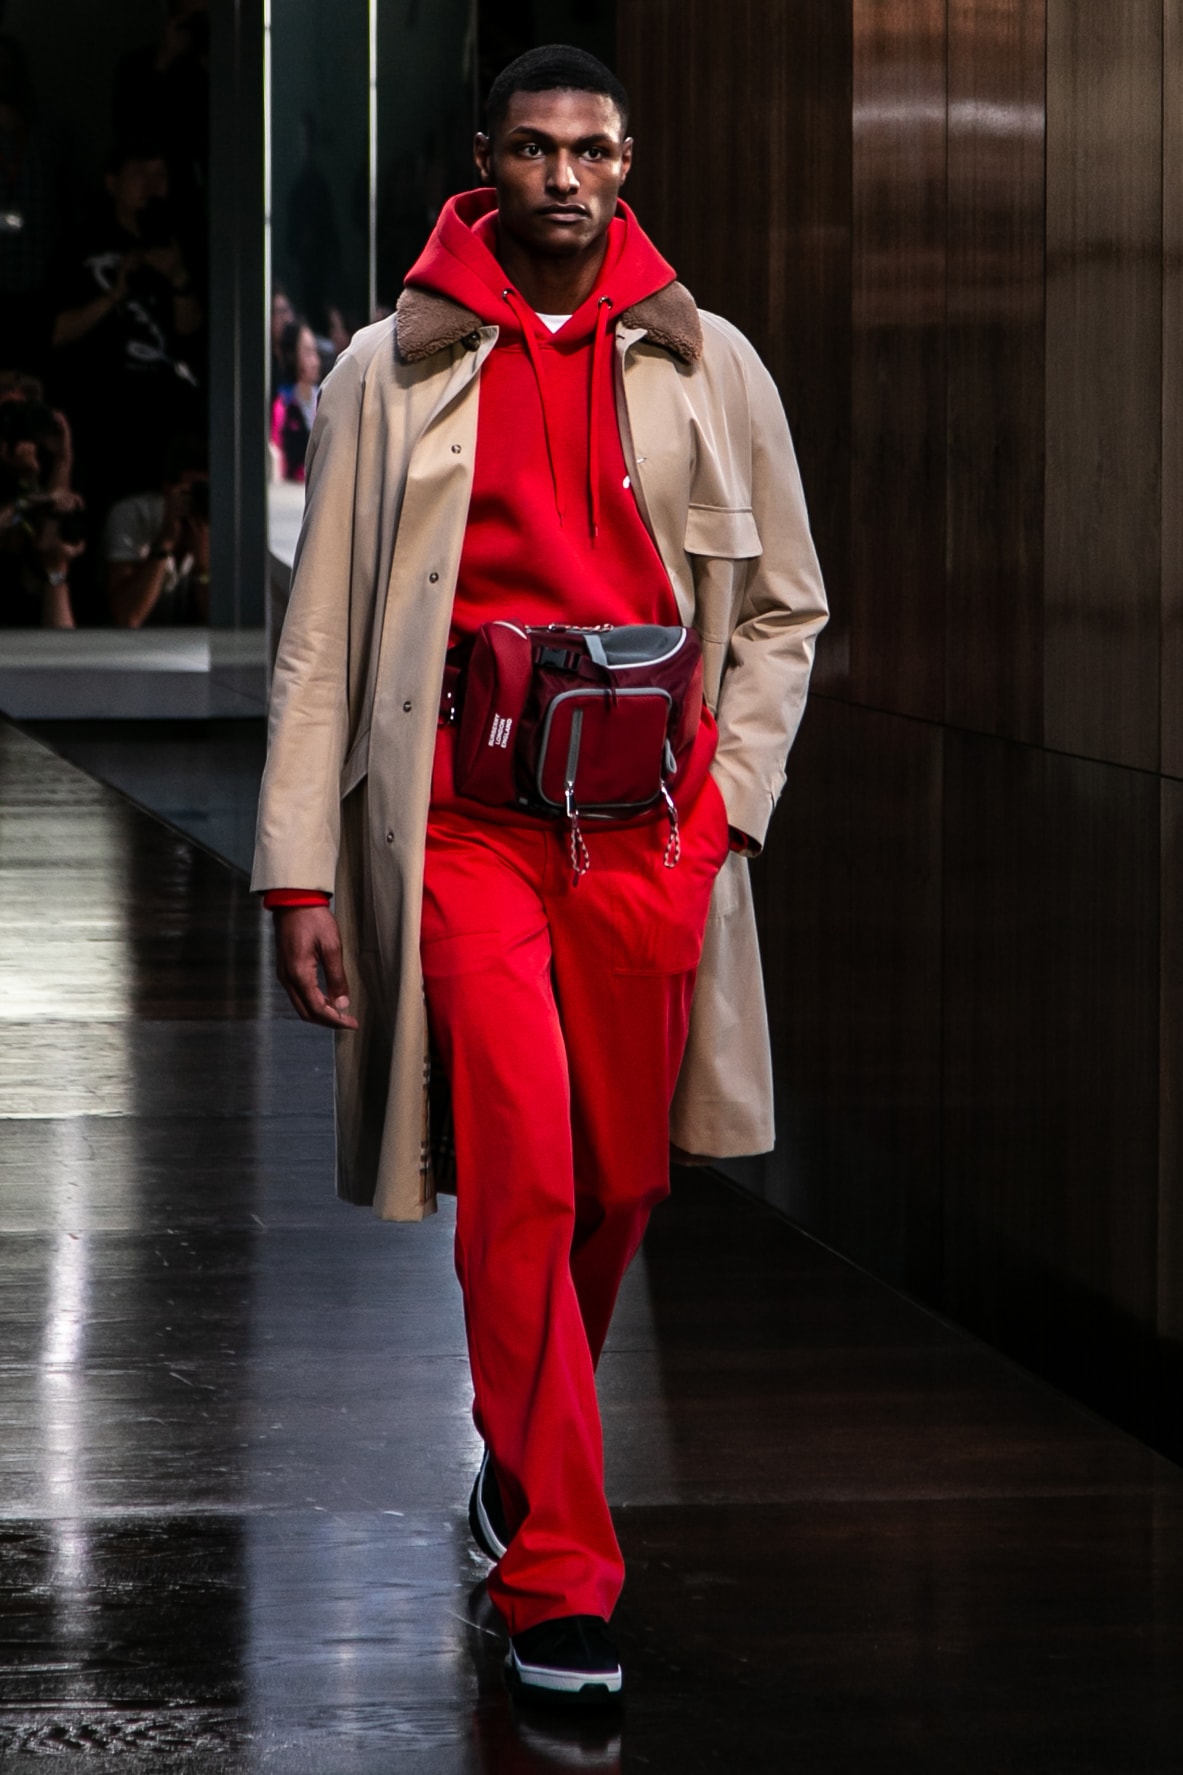 Burberry Riccardo Tisci défilé fashion week londres